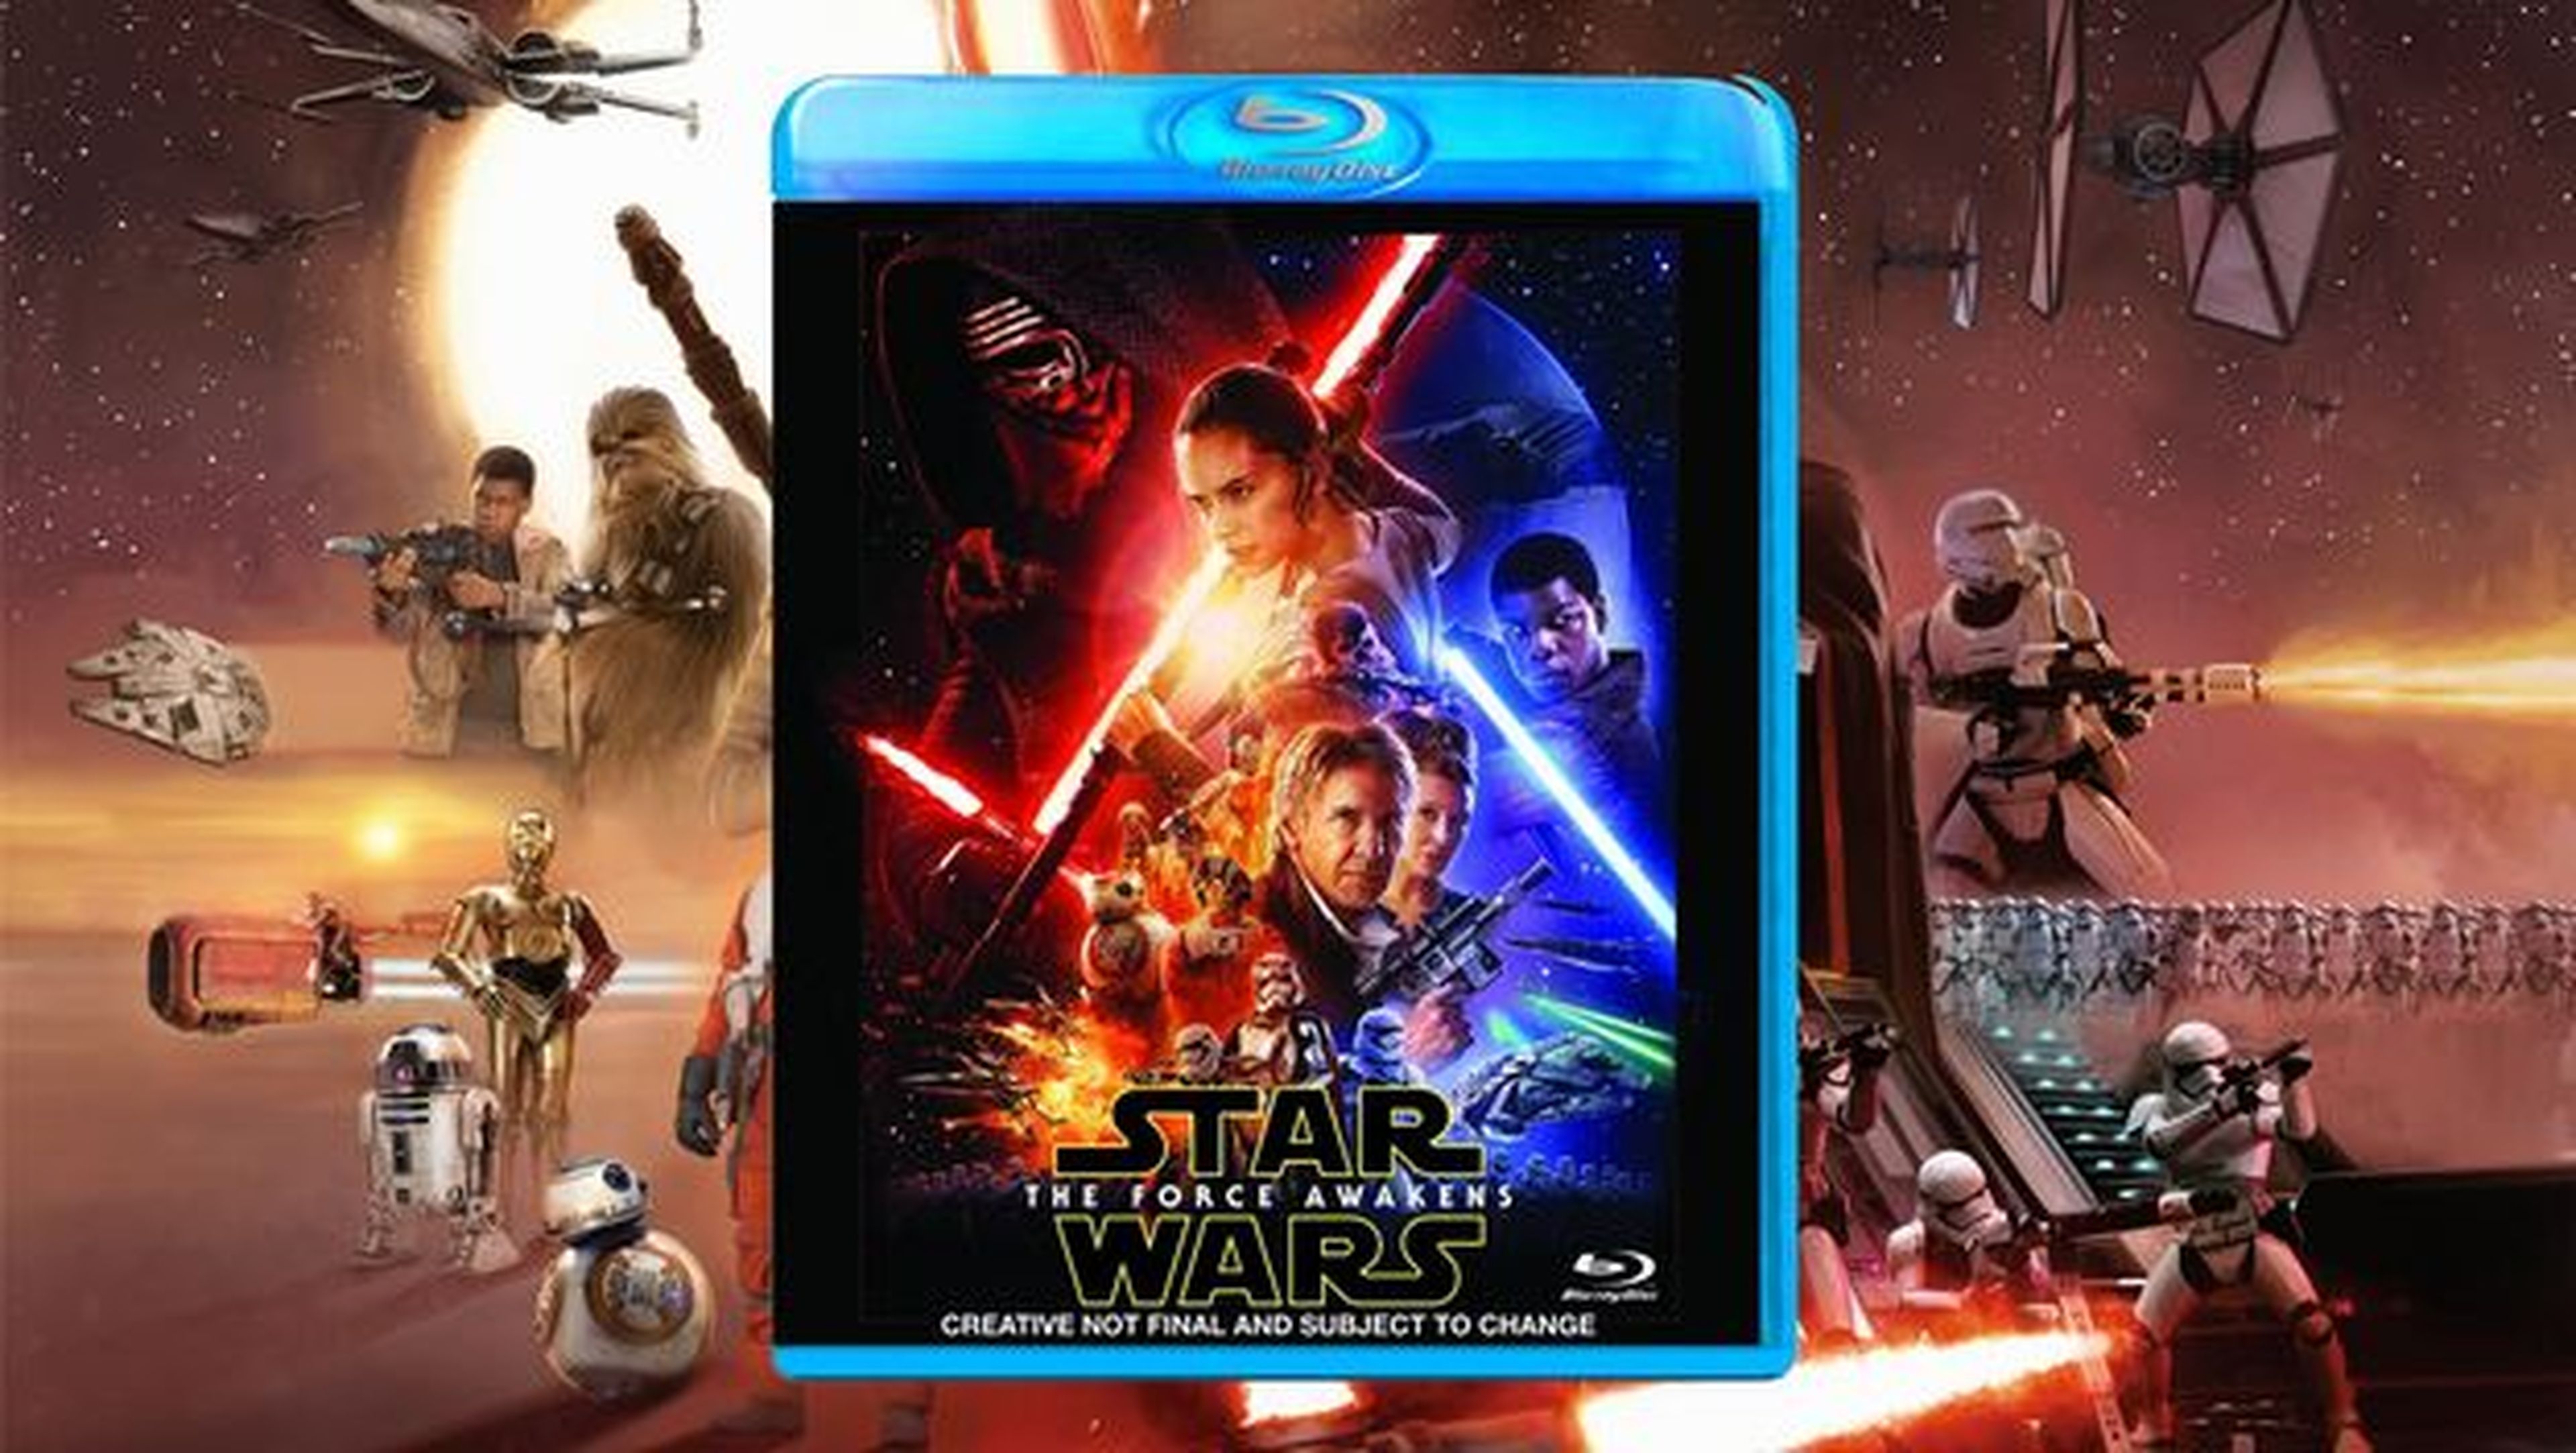 star wars 7 en dvd y blu-ray